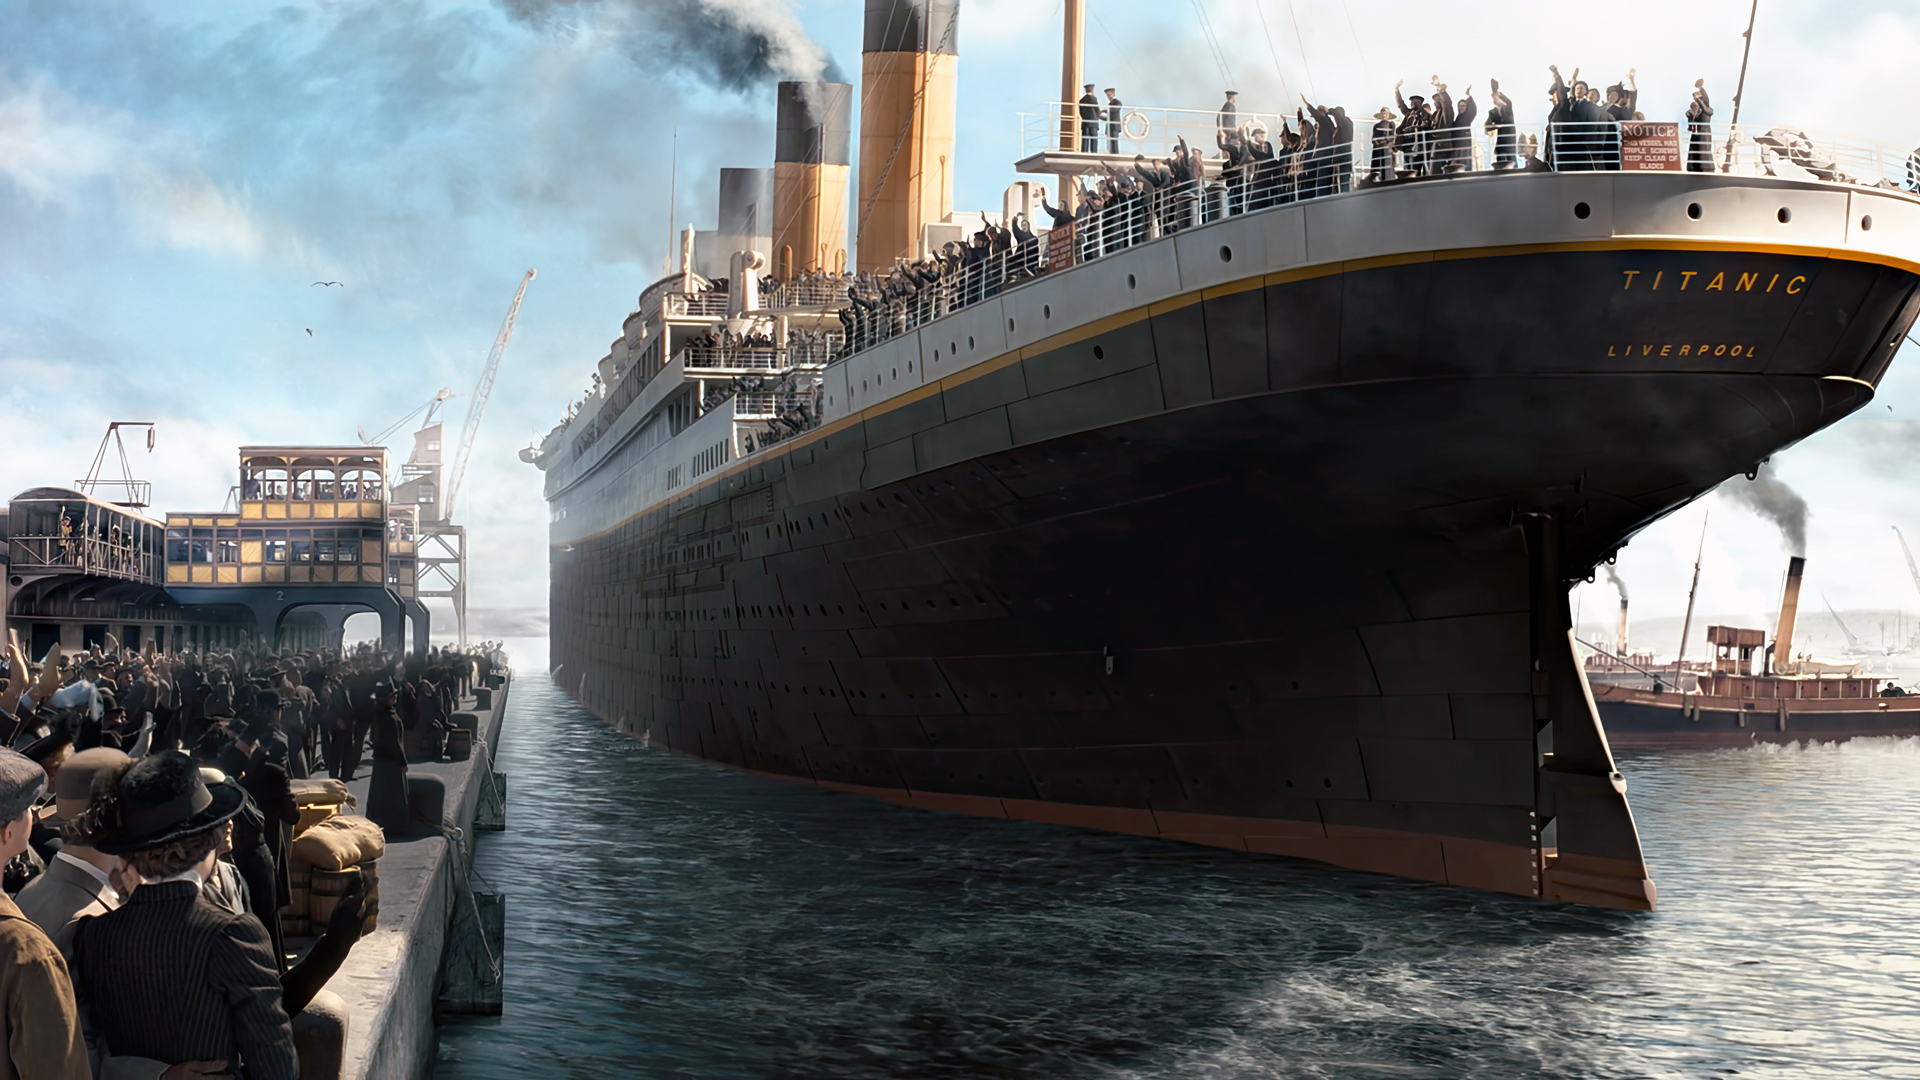 Titanic Movies Film Stills James Cameron Ship People Water Berth Harbor Crowd Cranes Machine Southam 1920x1080